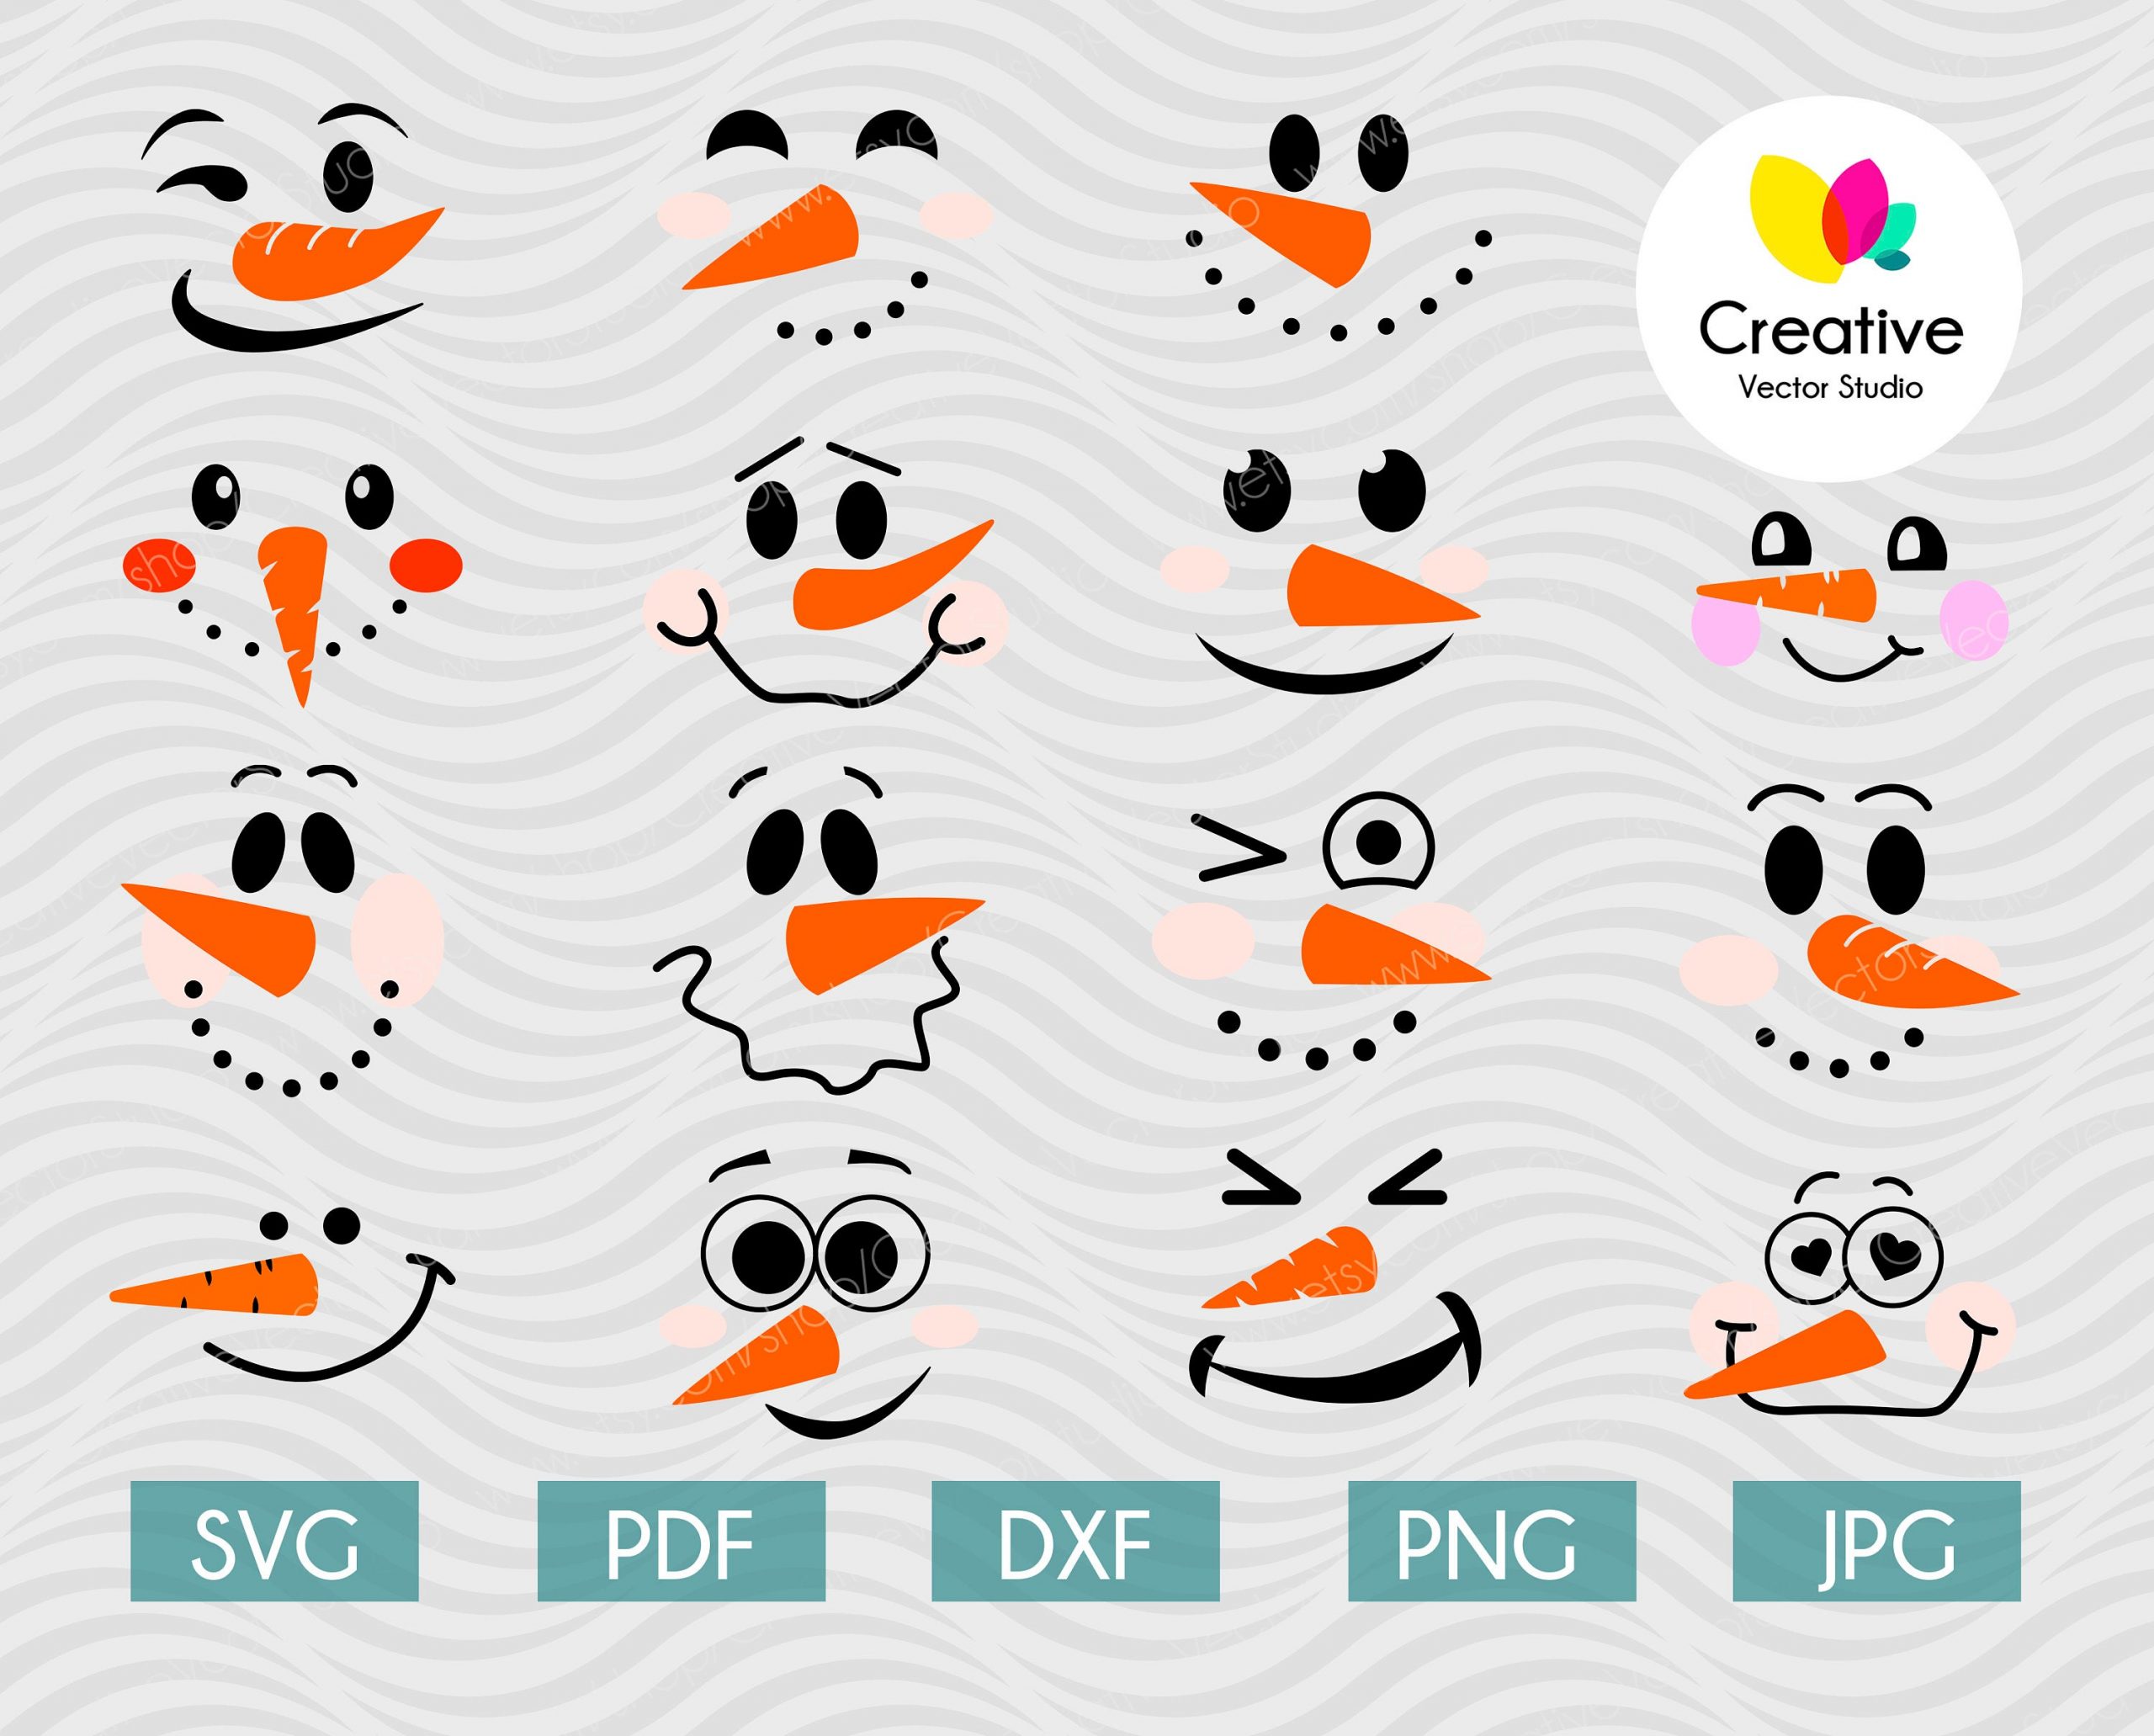 snowman face pattern